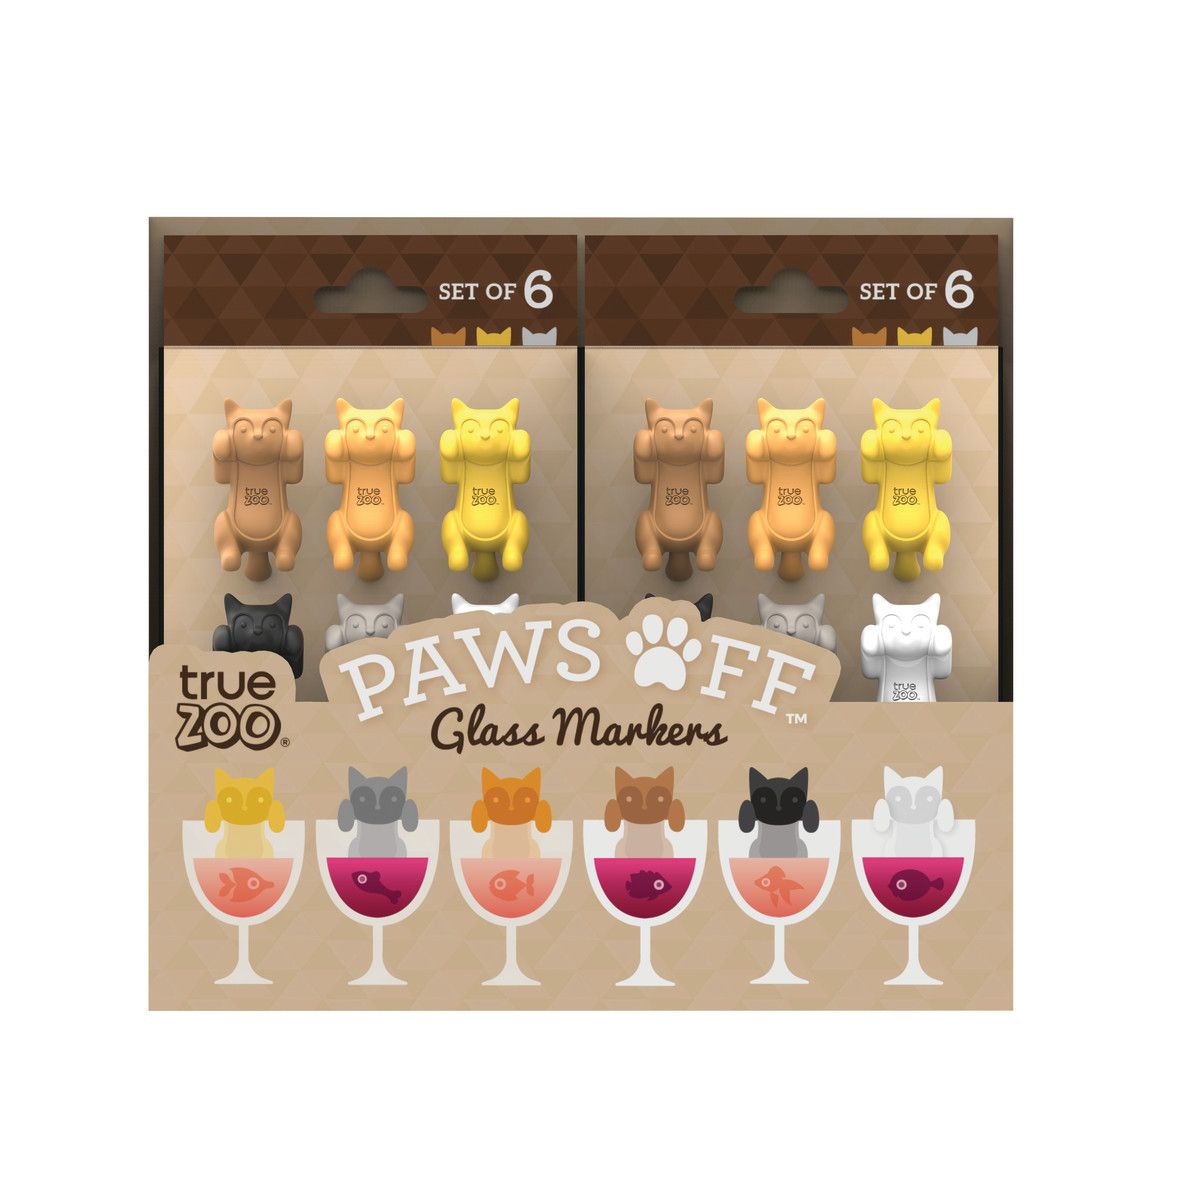  GUZUHUKU Funny Wine Glass Charms, 30pcs Drink Markers